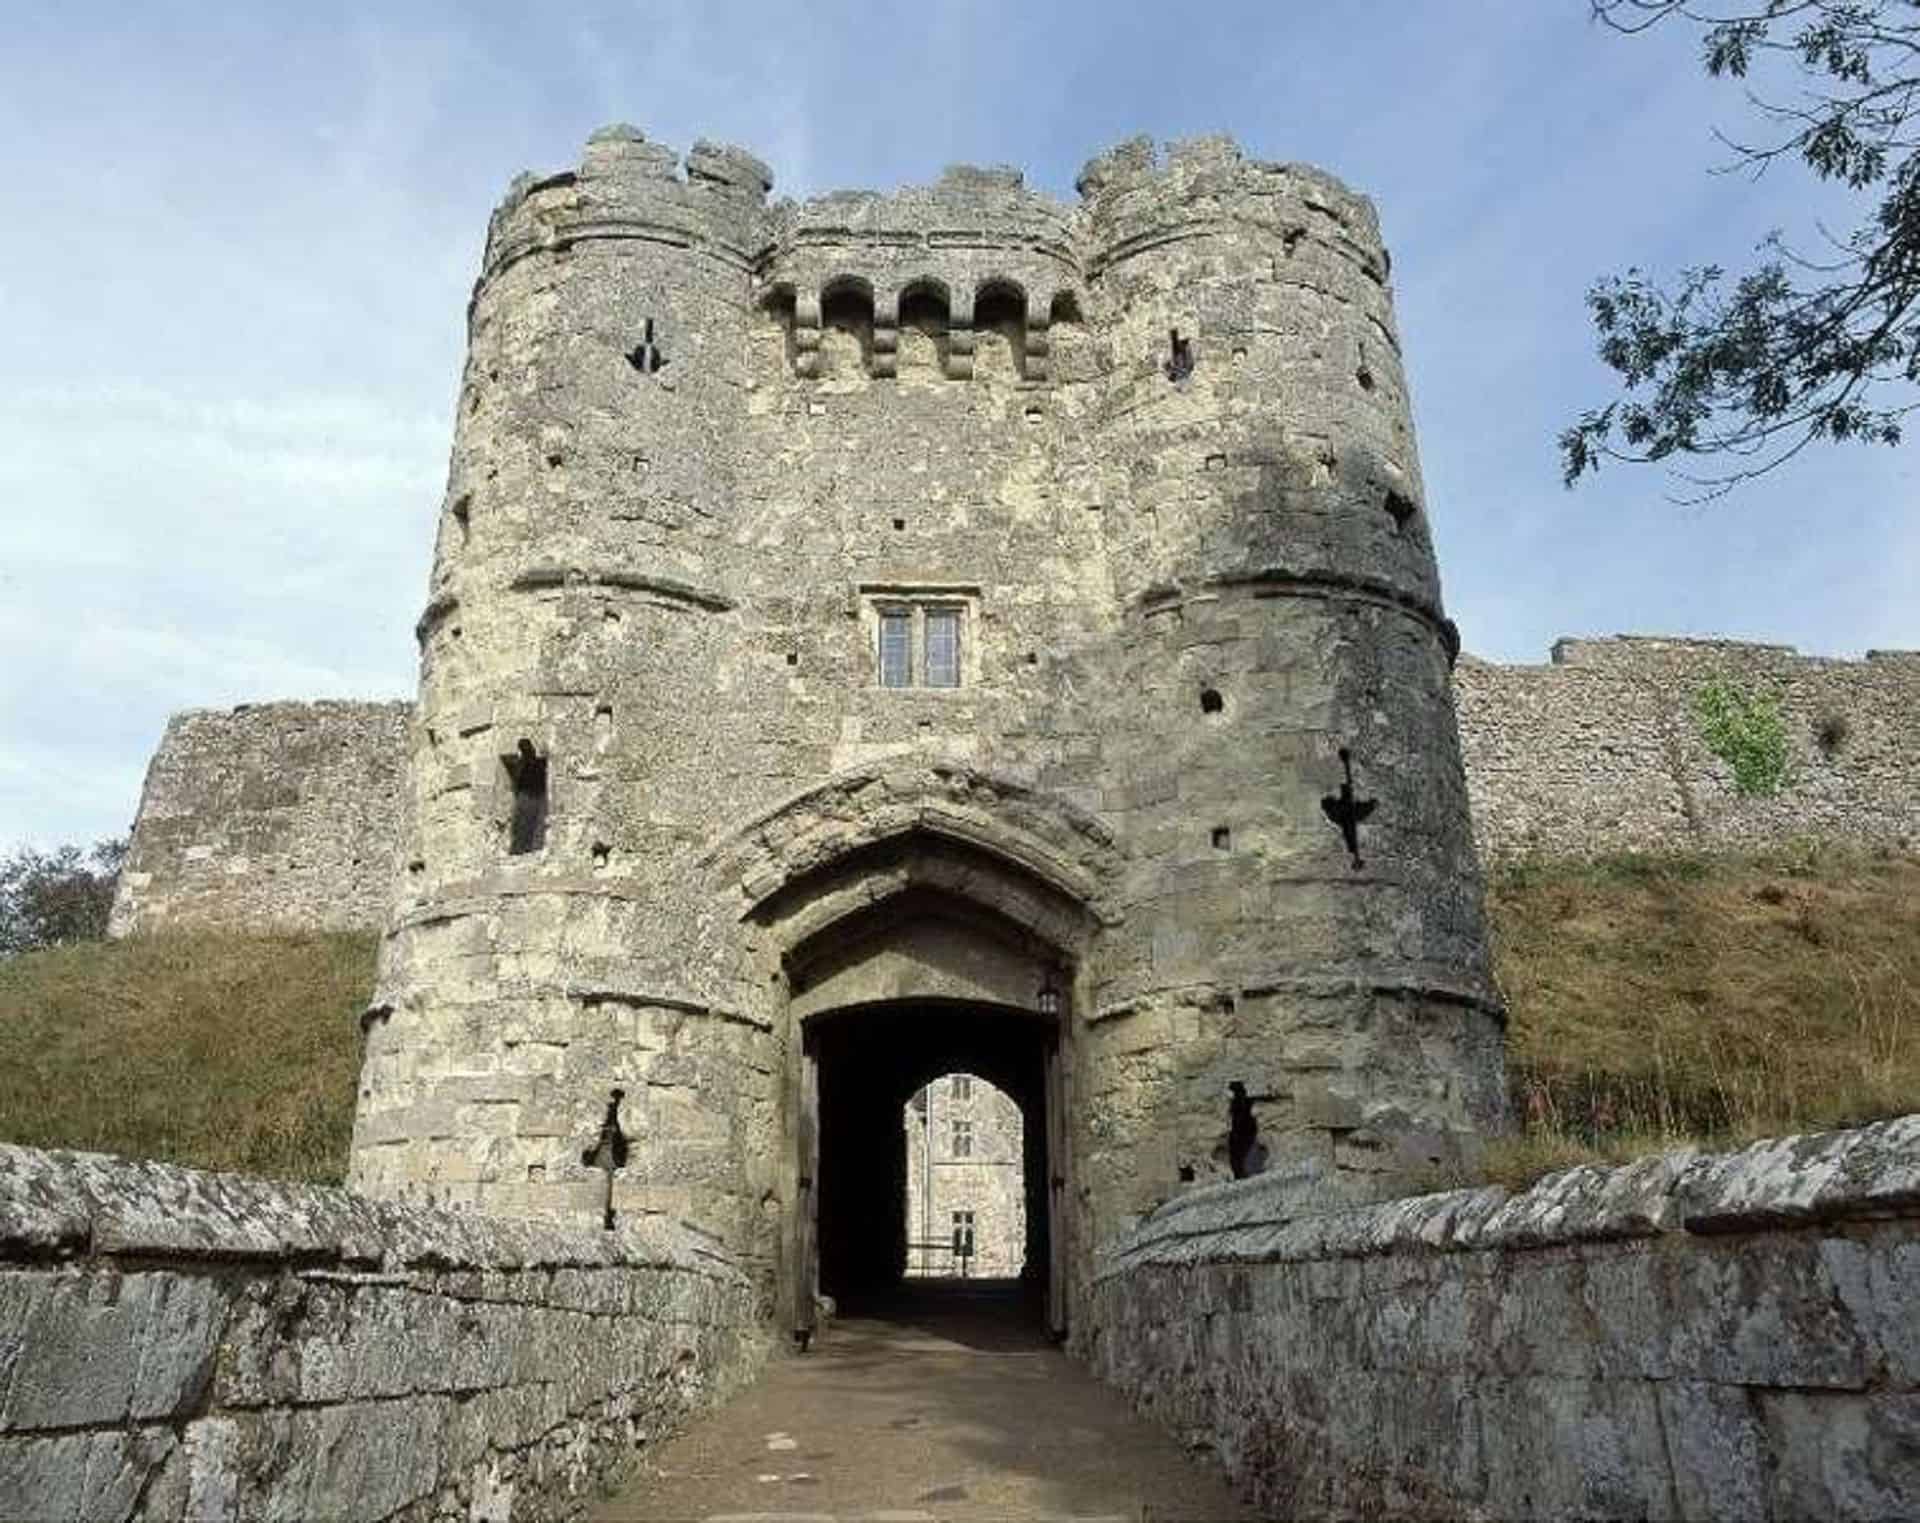 Carisbrooke Castle in UK